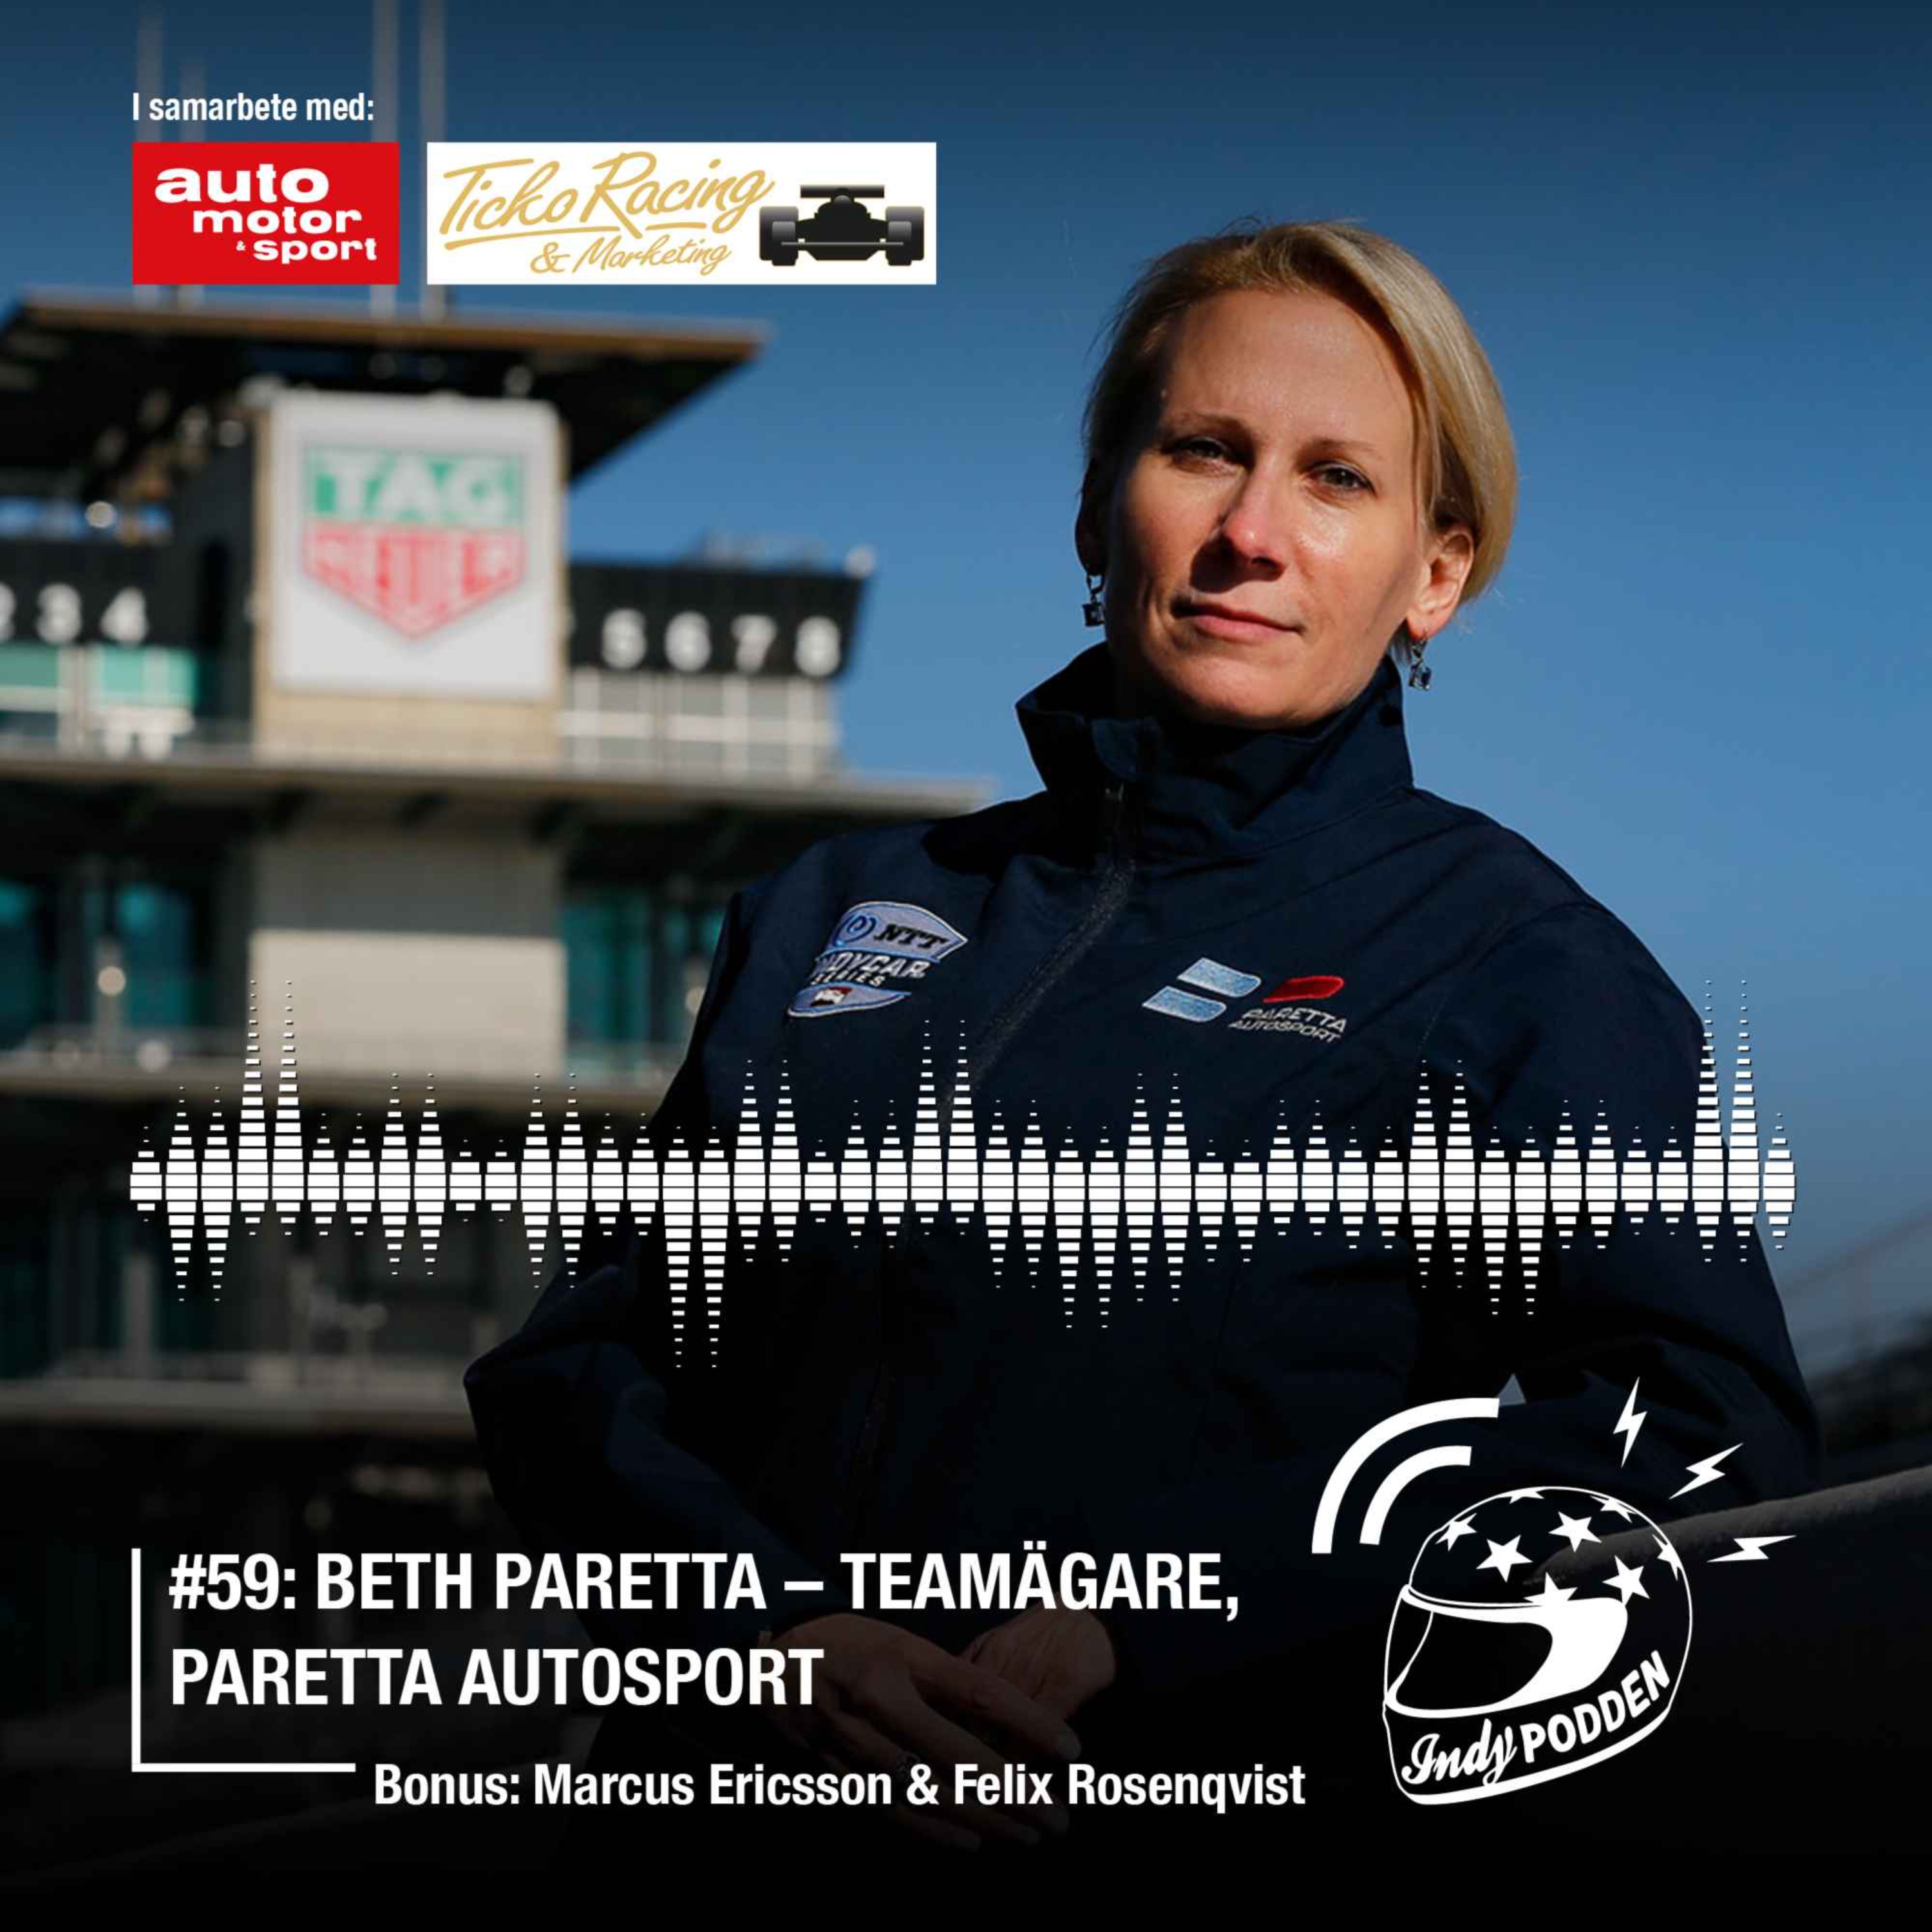 #59: Beth Paretta – teamägare, Paretta Autosport